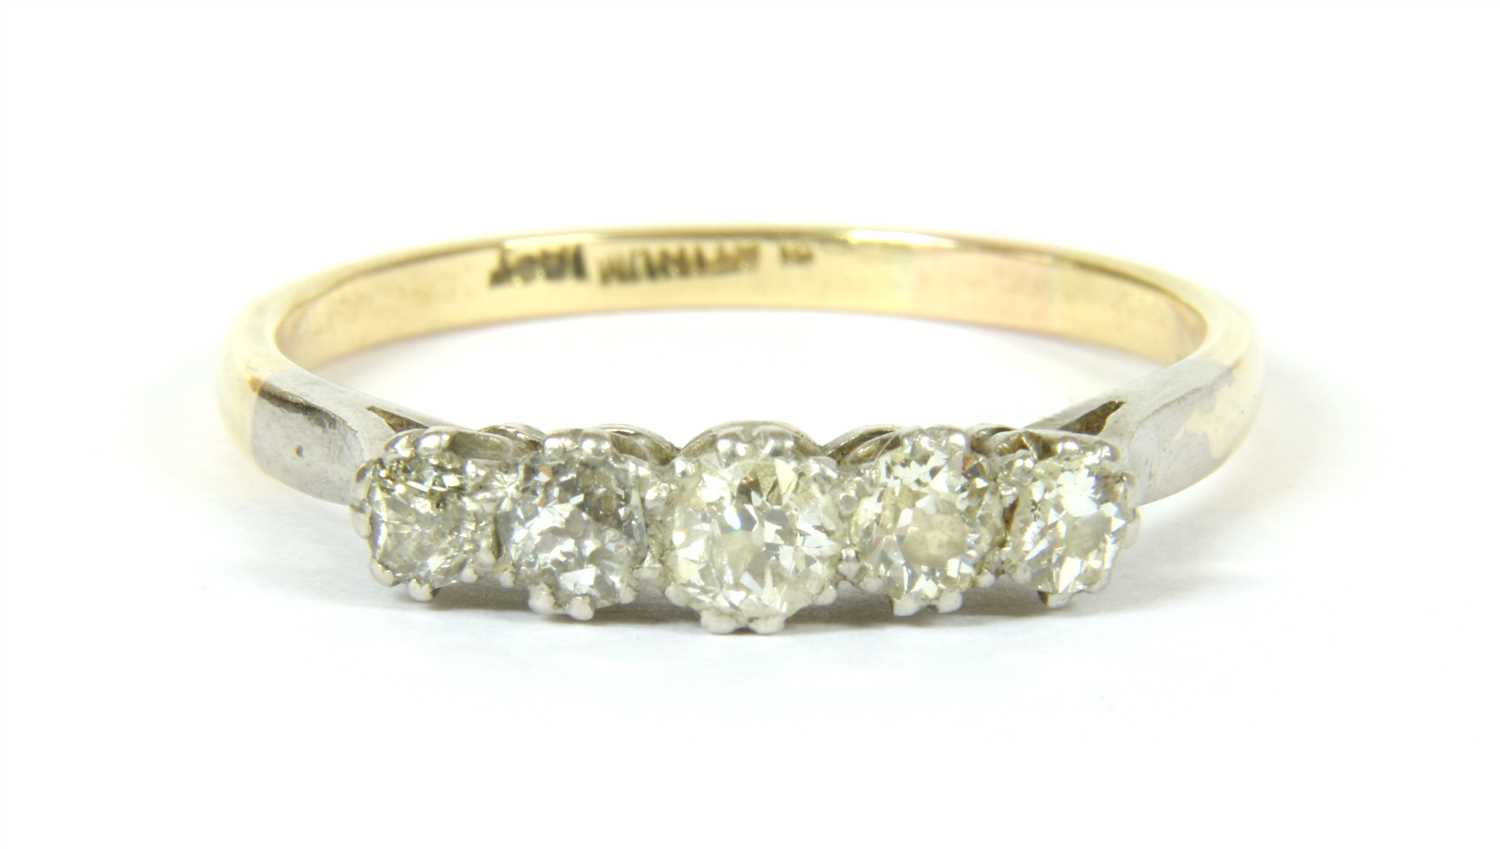 Lot 7 - A graduated five stone diamond ring with Swiss cut diamonds